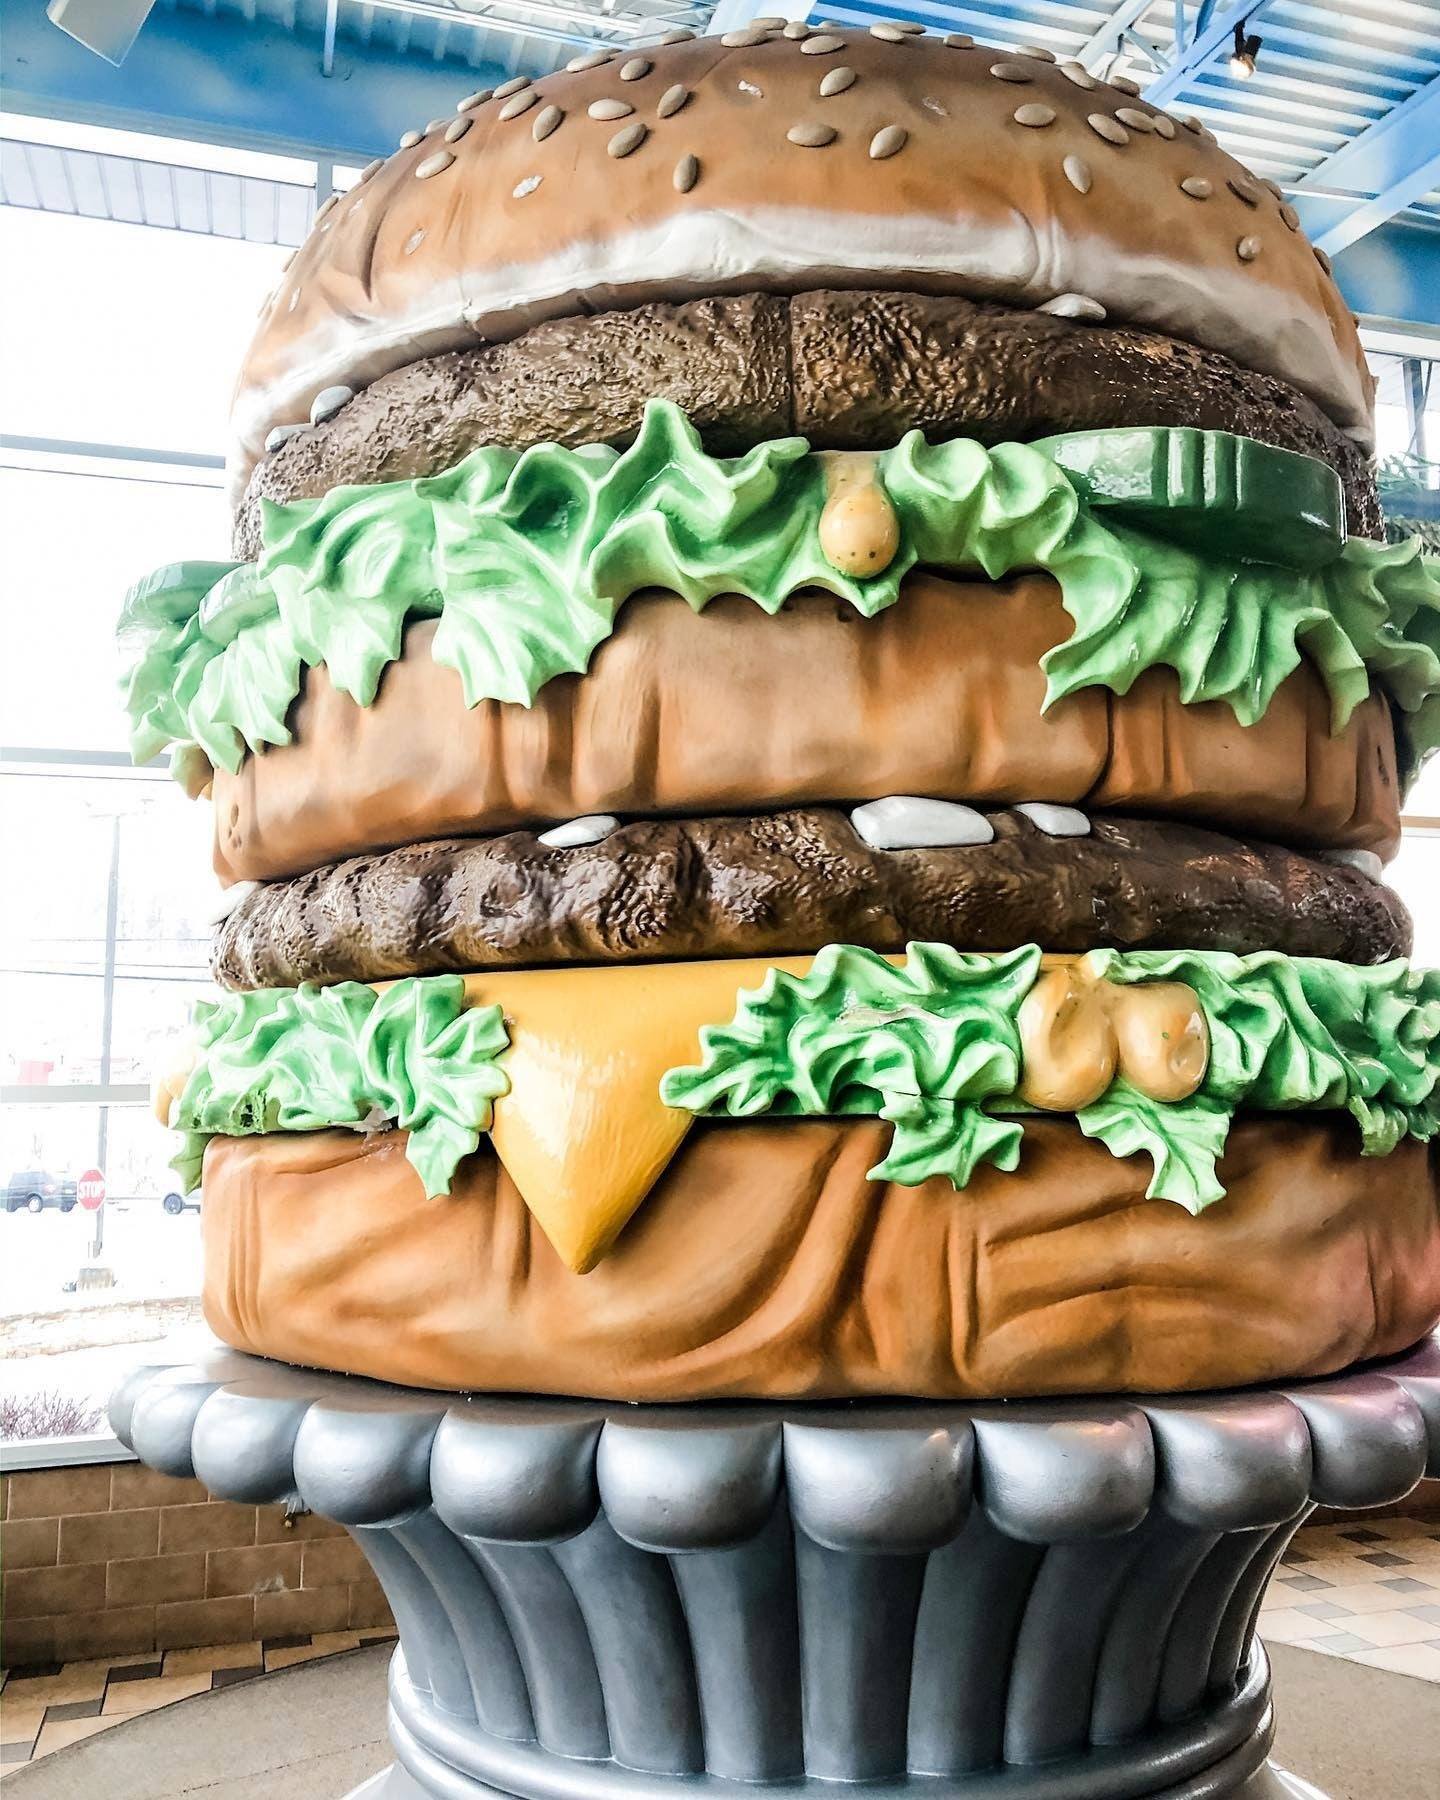 World’s largest Big Mac statue: The Big Mac Museum sets world record